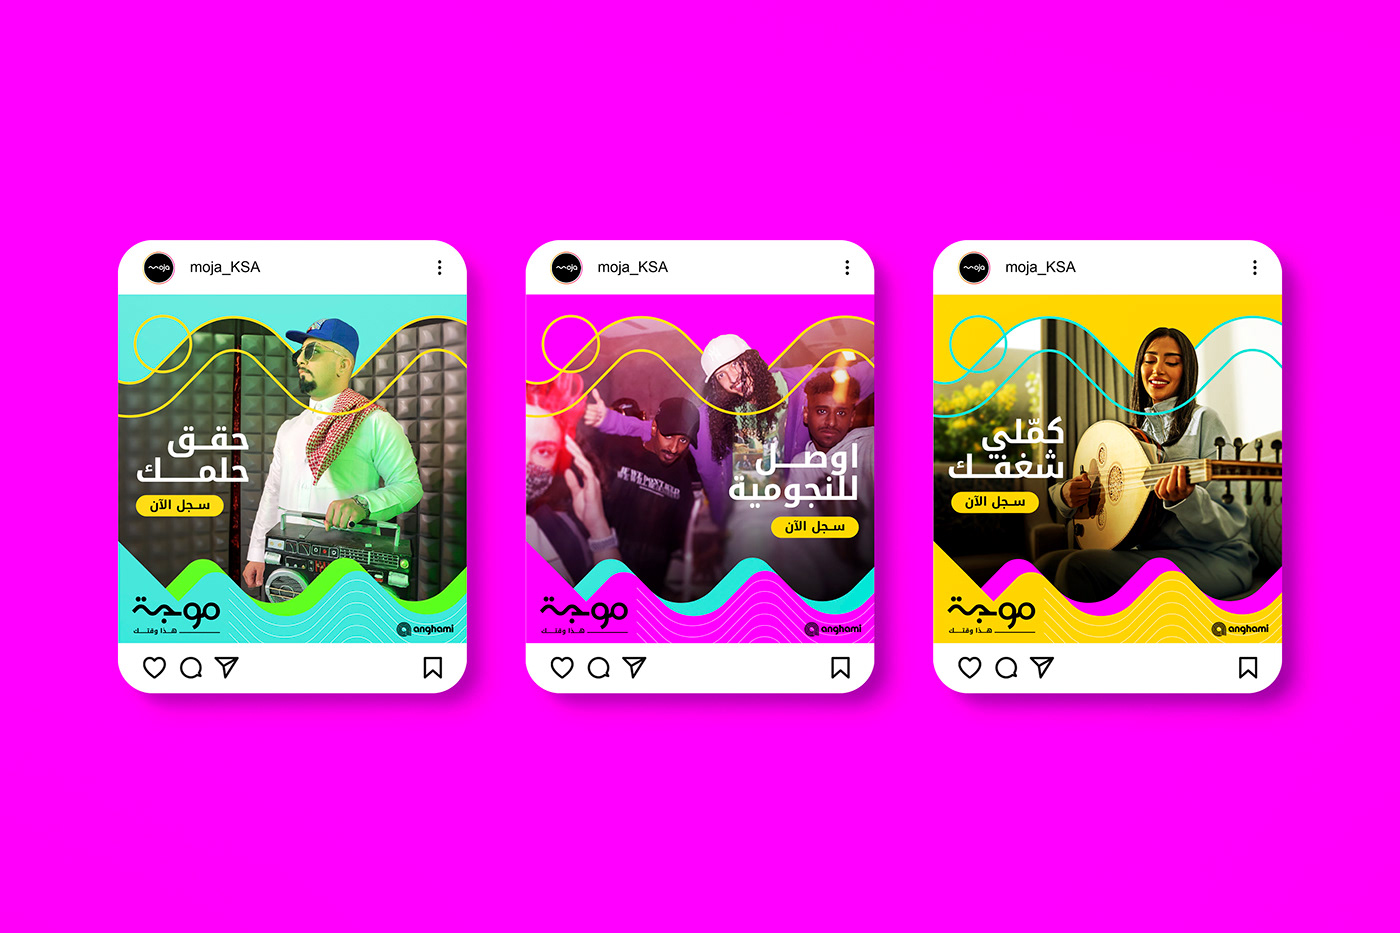 music anghami Social media post campaign Saudi Arabia Advertising  Music Genres hip hop REMIX graphic